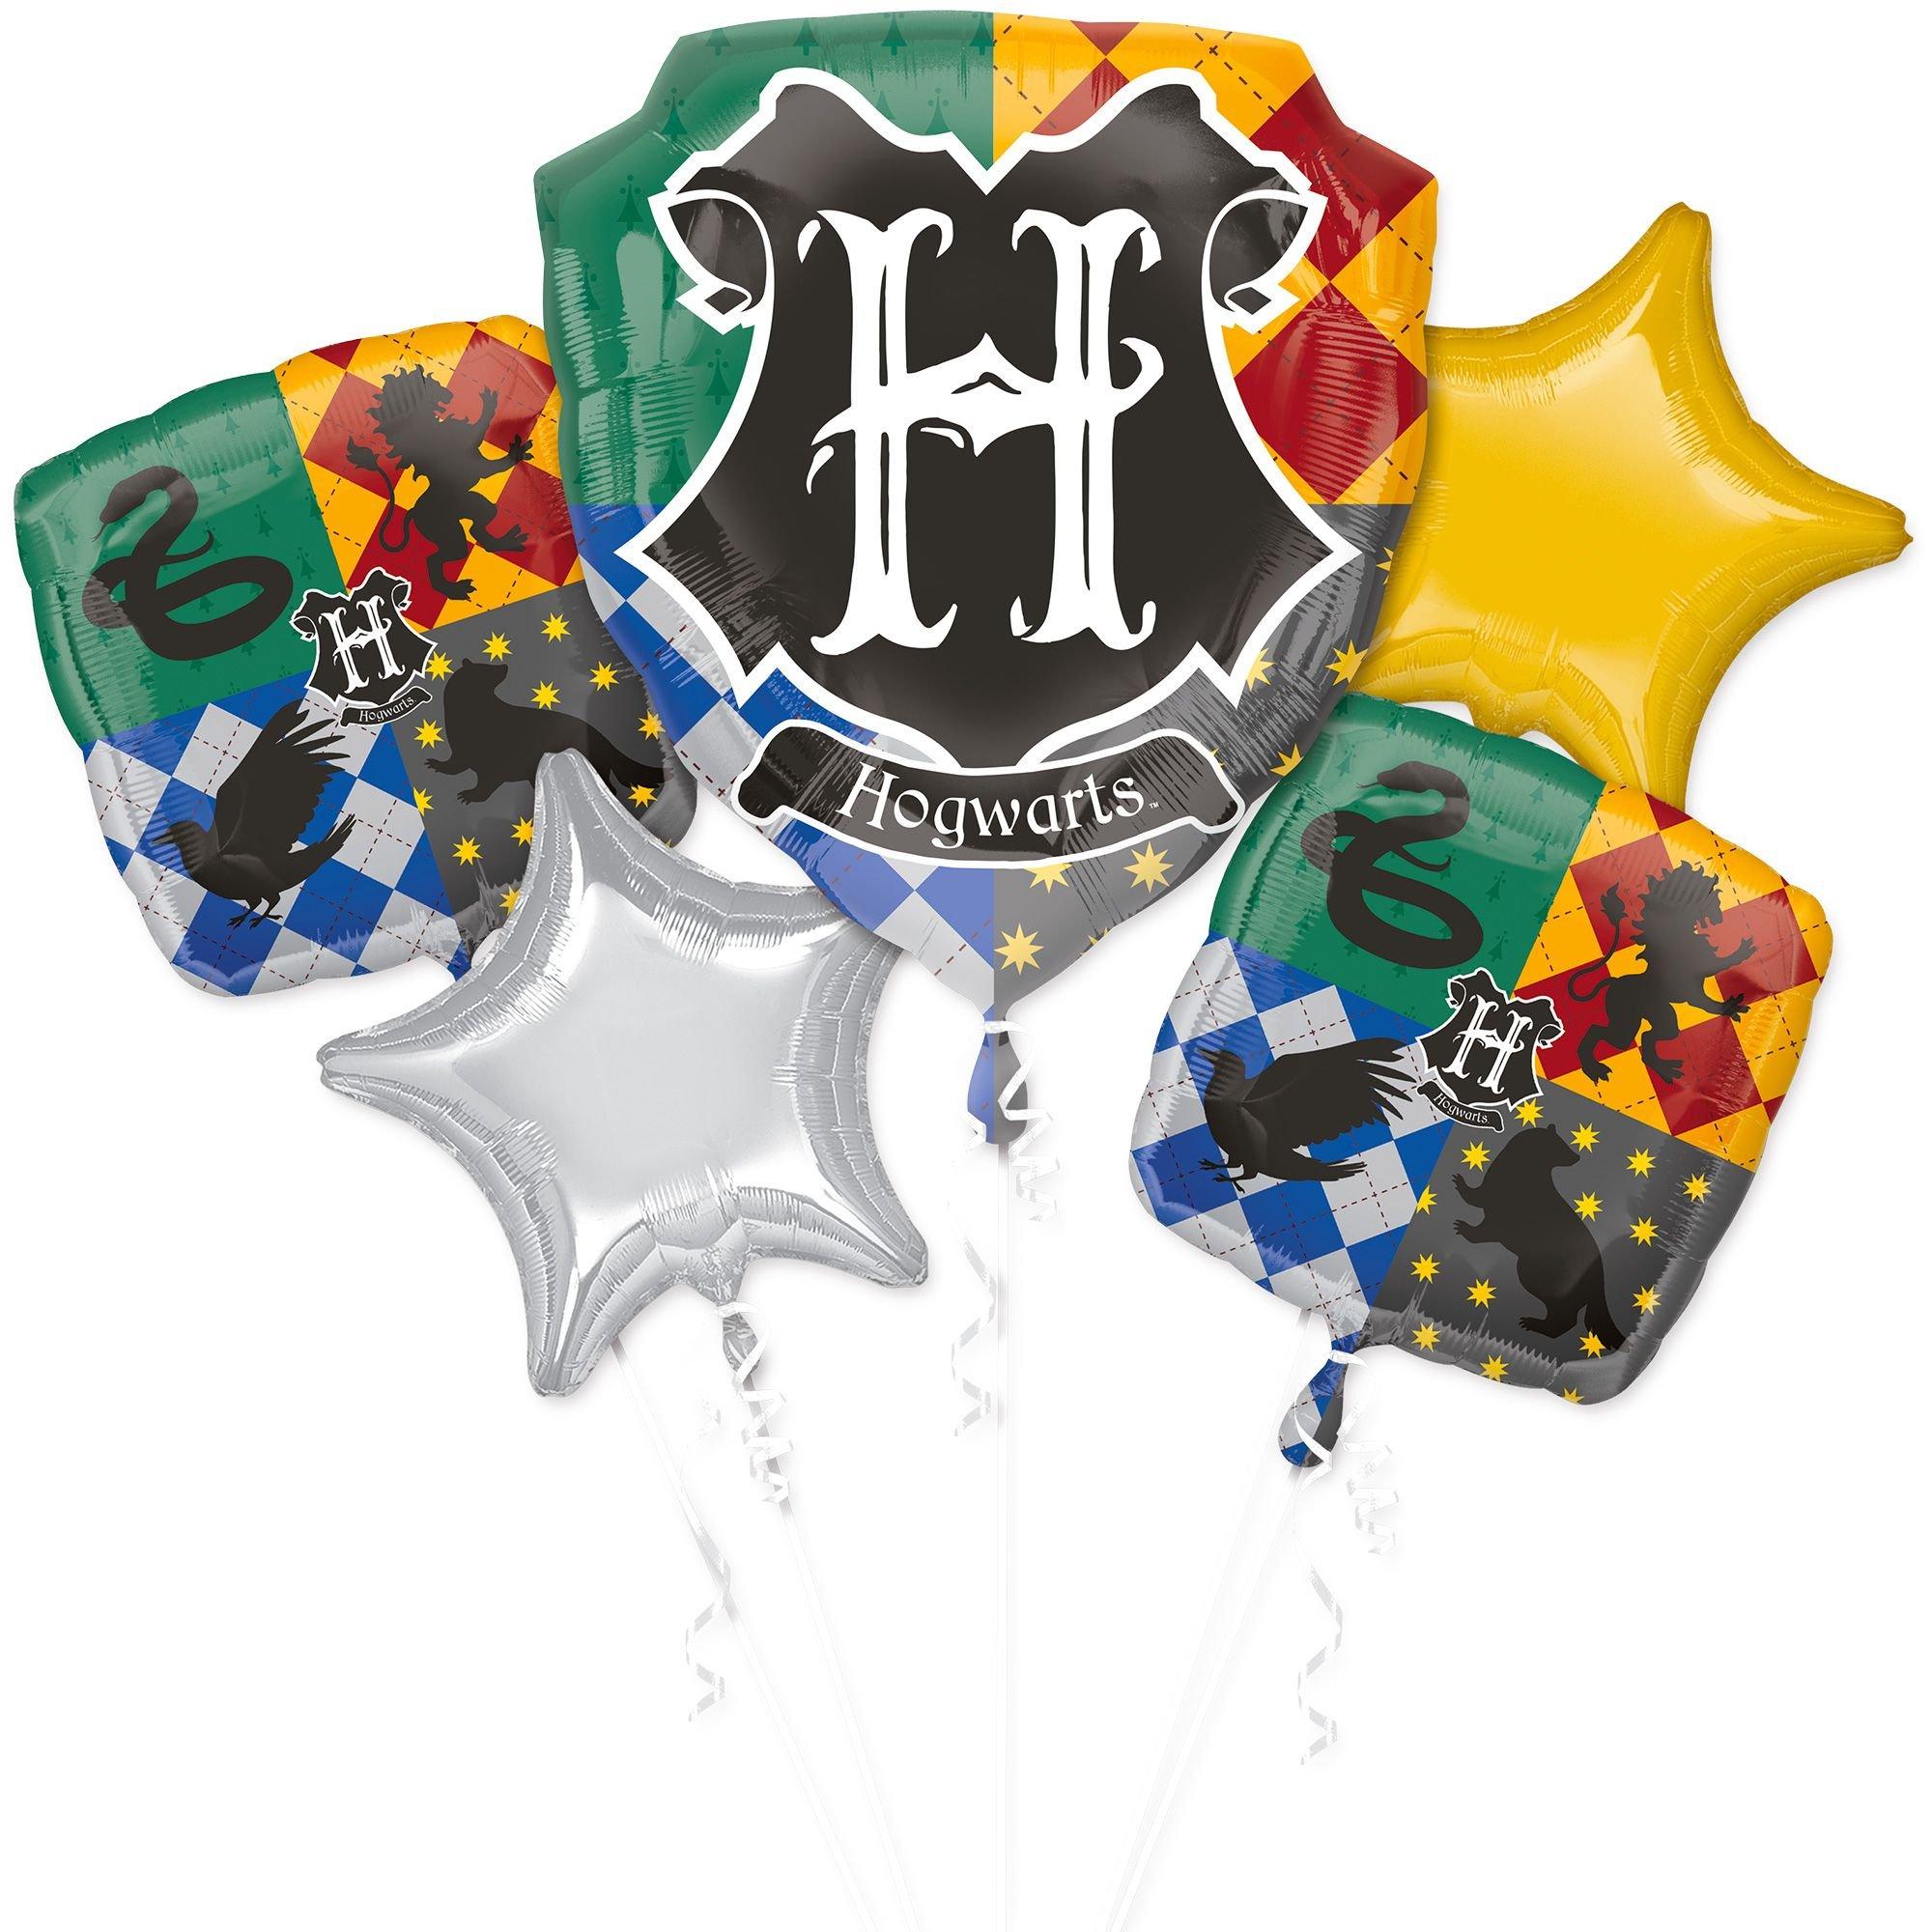 Ballons Anniversaire Harry Potter x 8